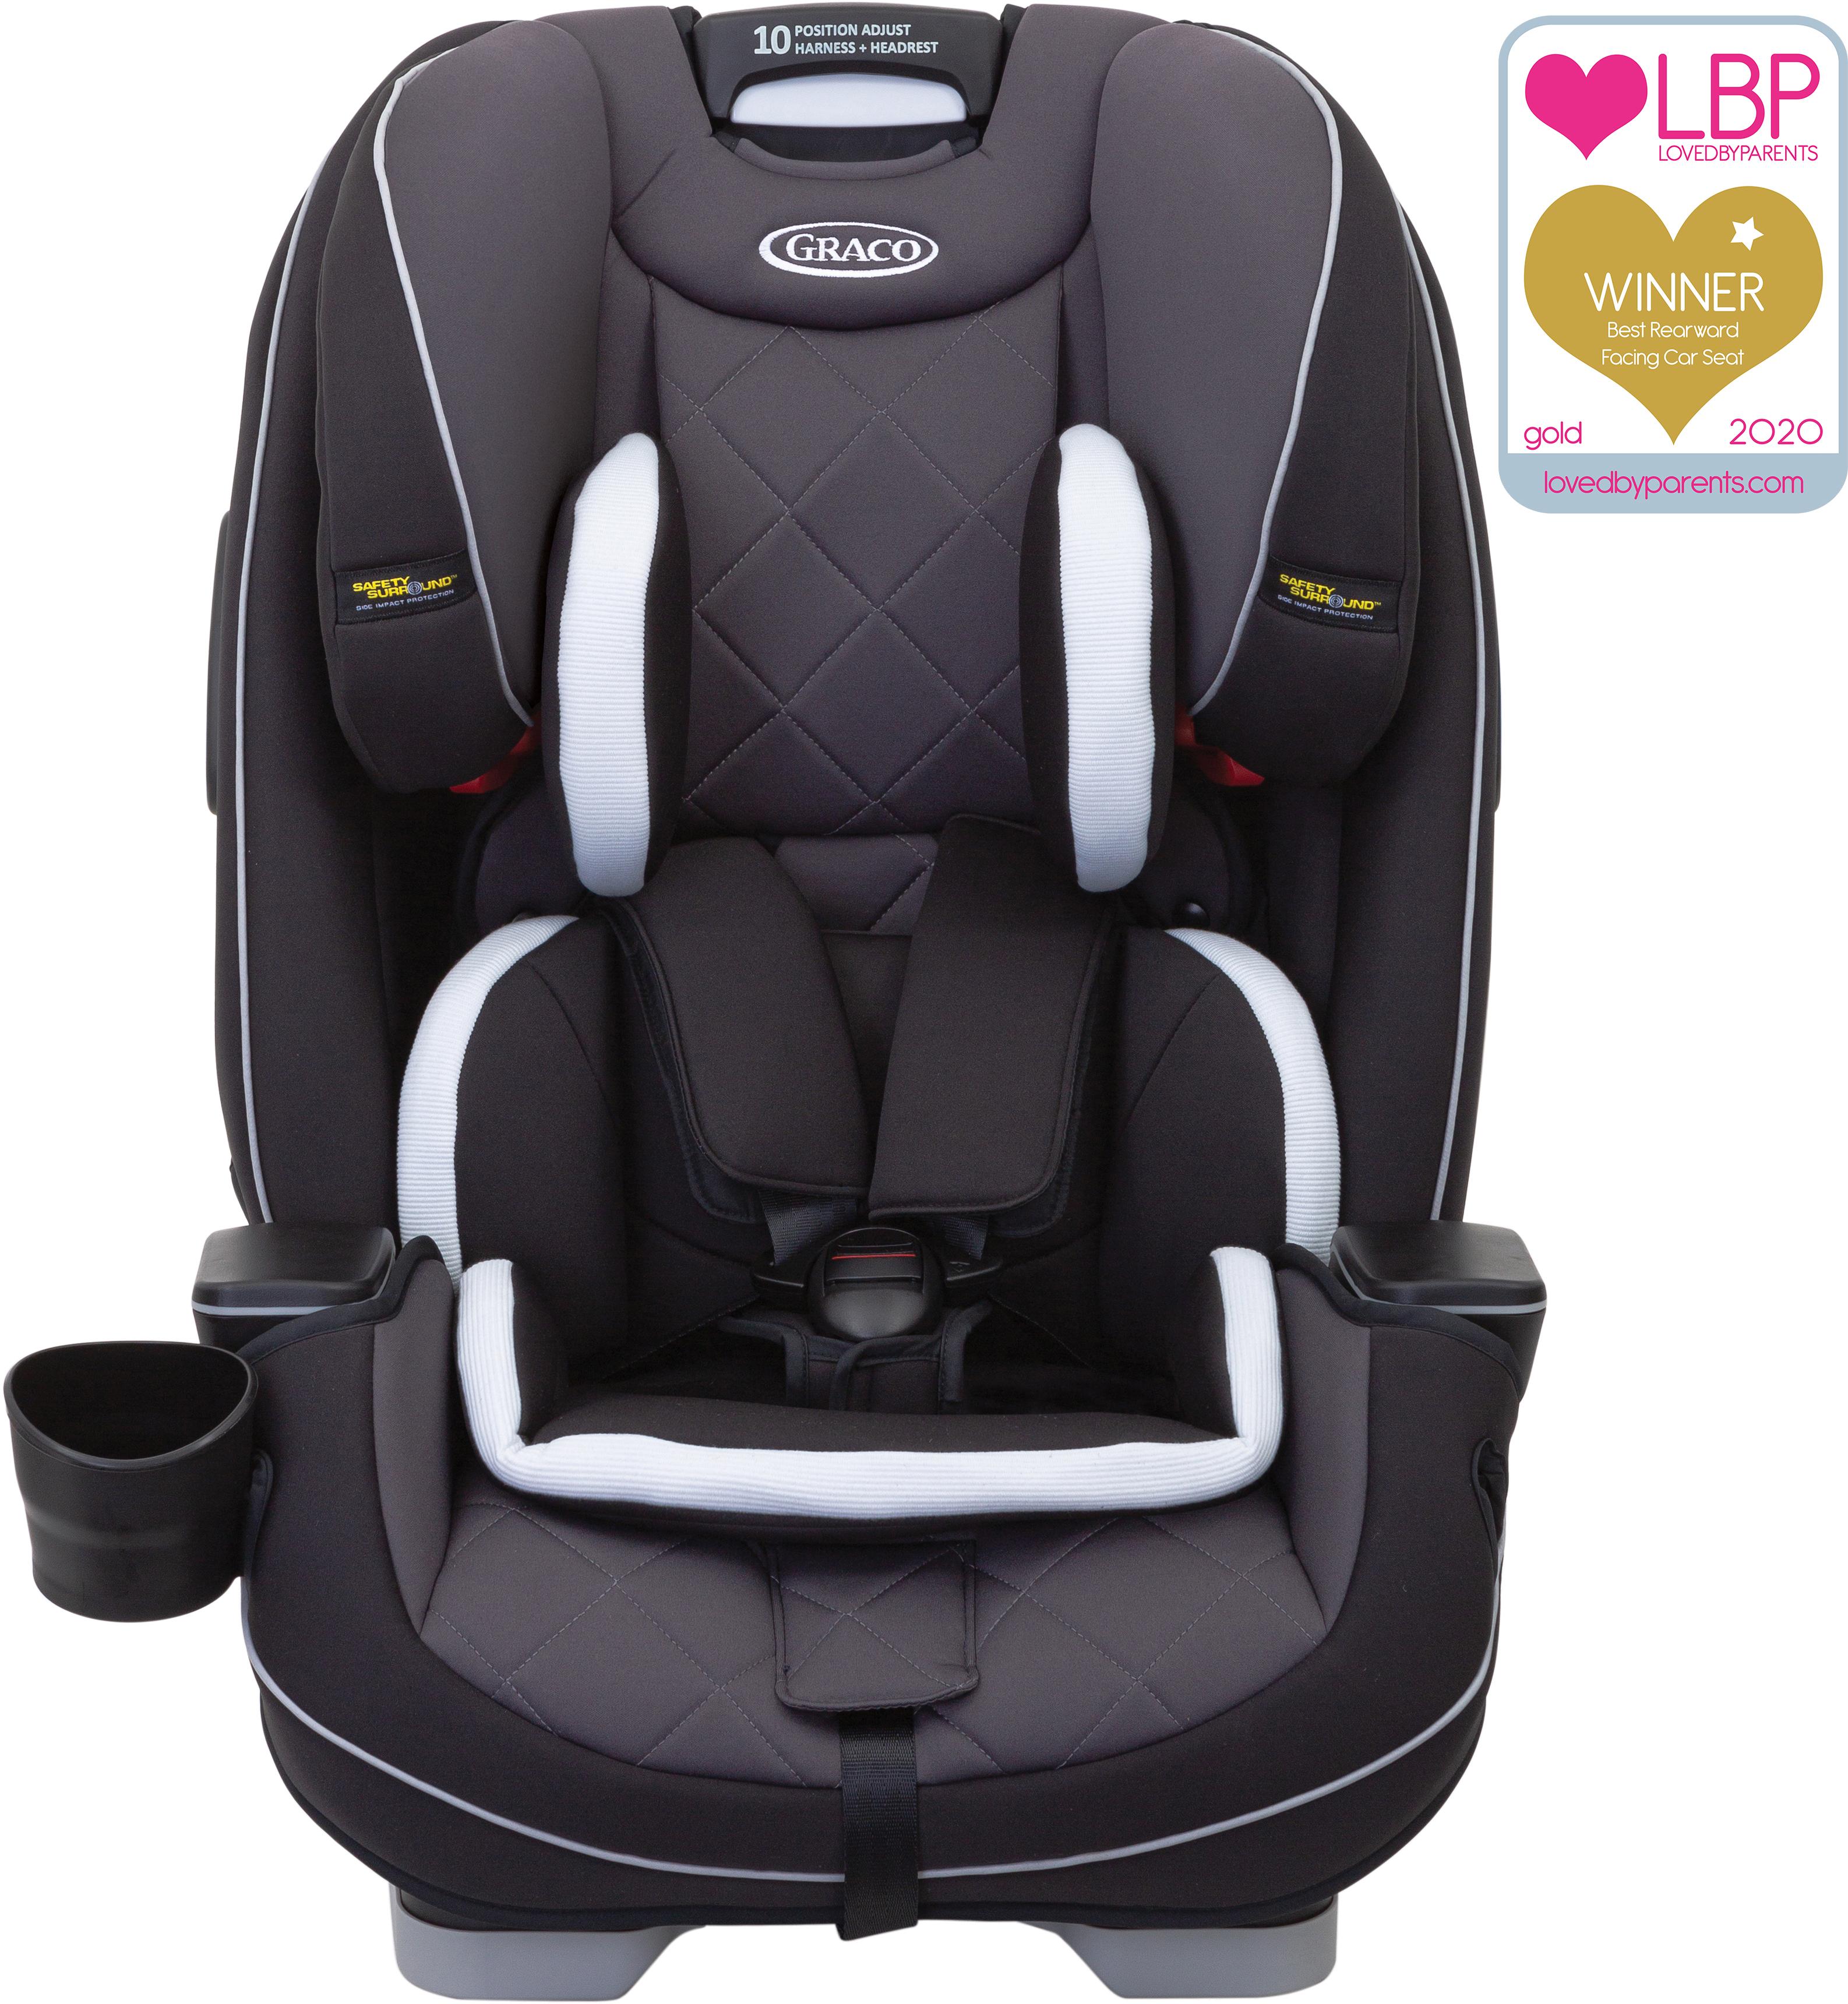 Graco Slimfit Lx Group 0+/1/2/3 Child Car Seat - Black